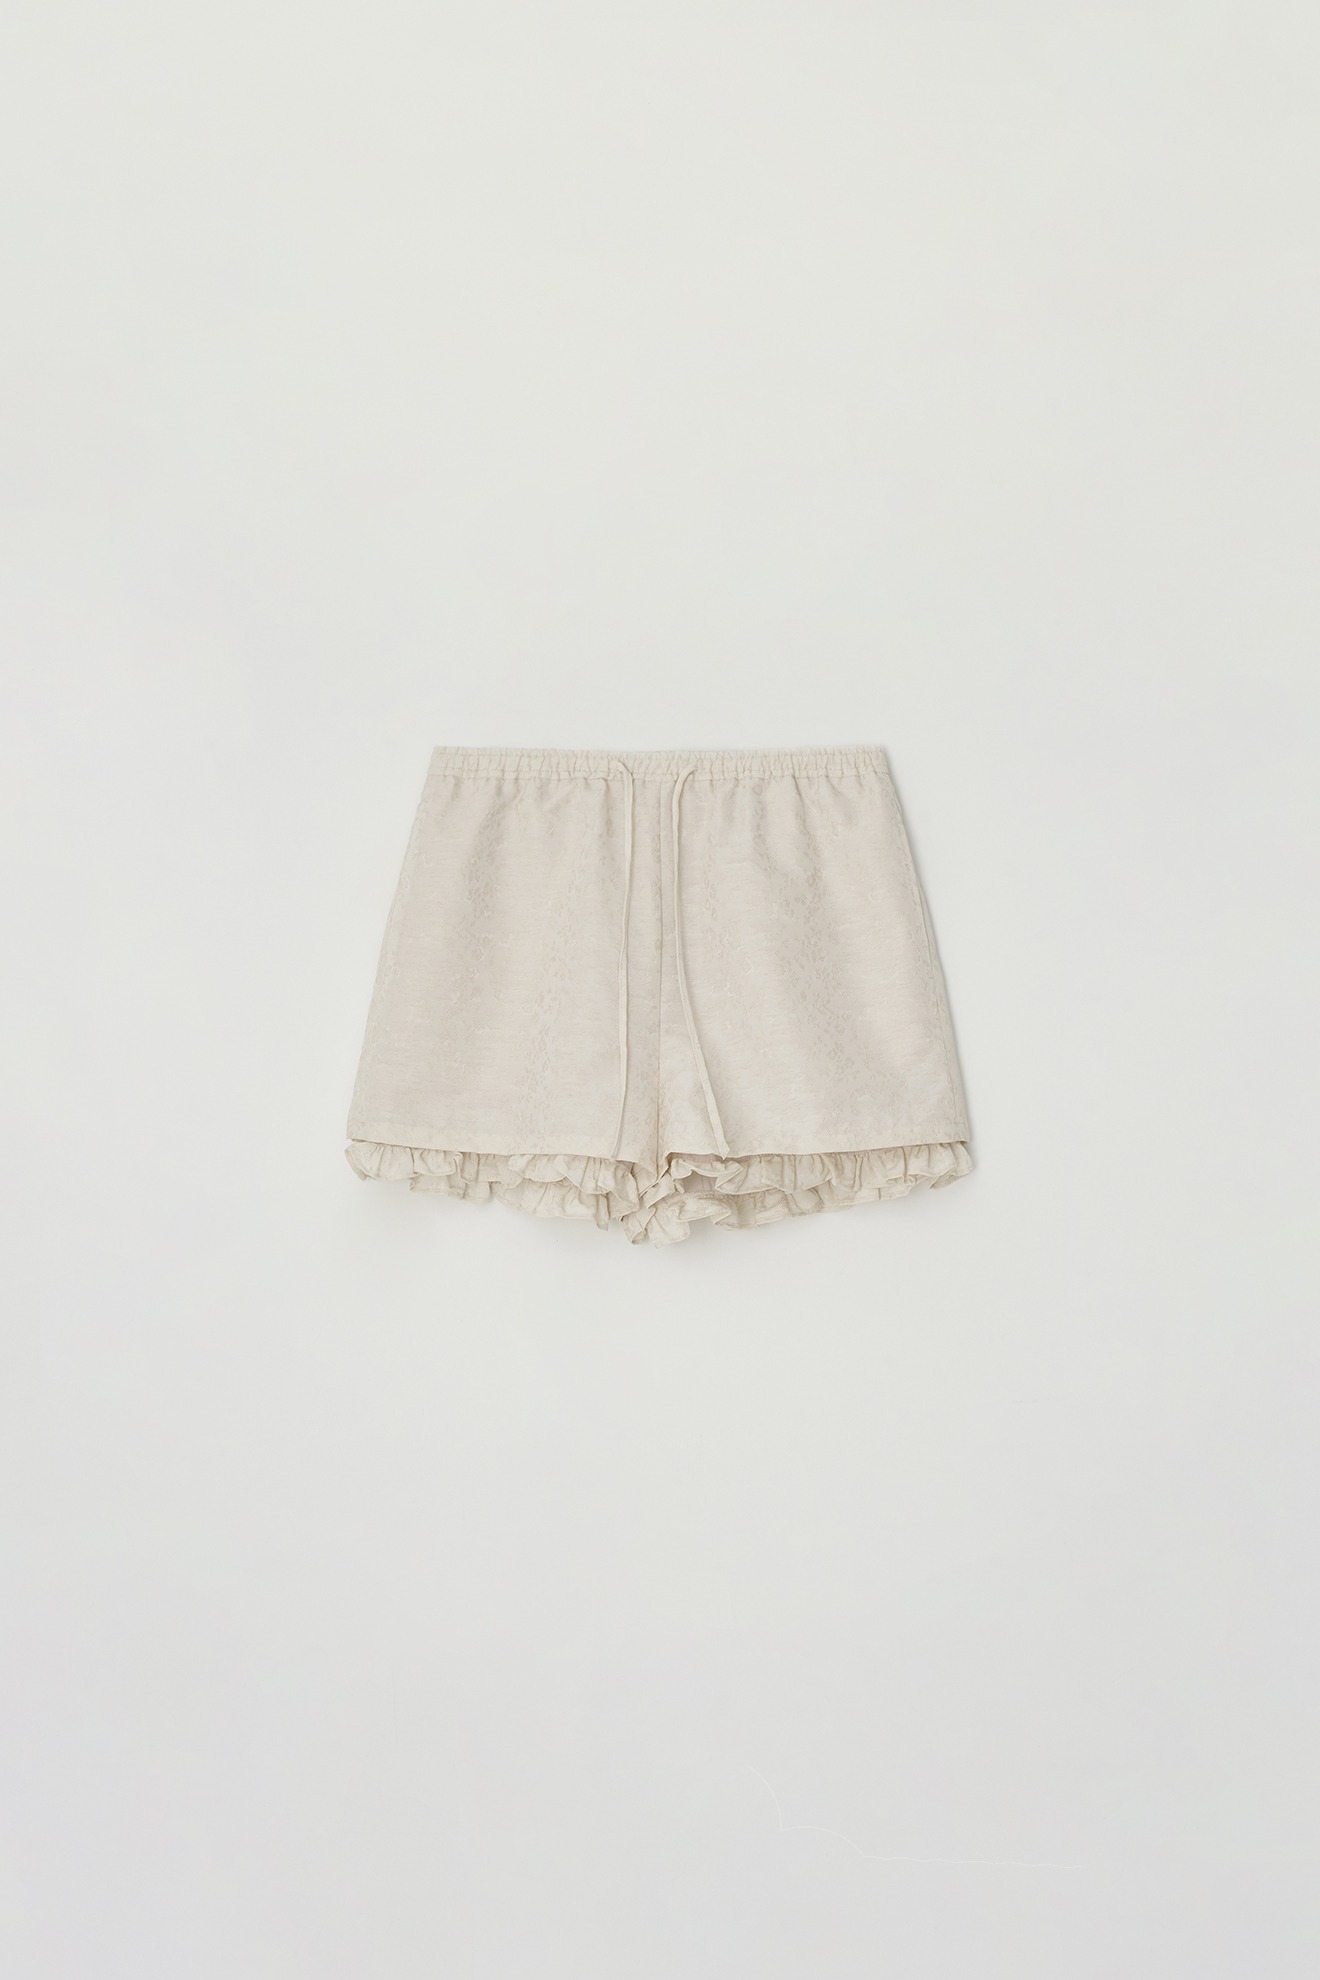 Jacquard Shorts (cream)